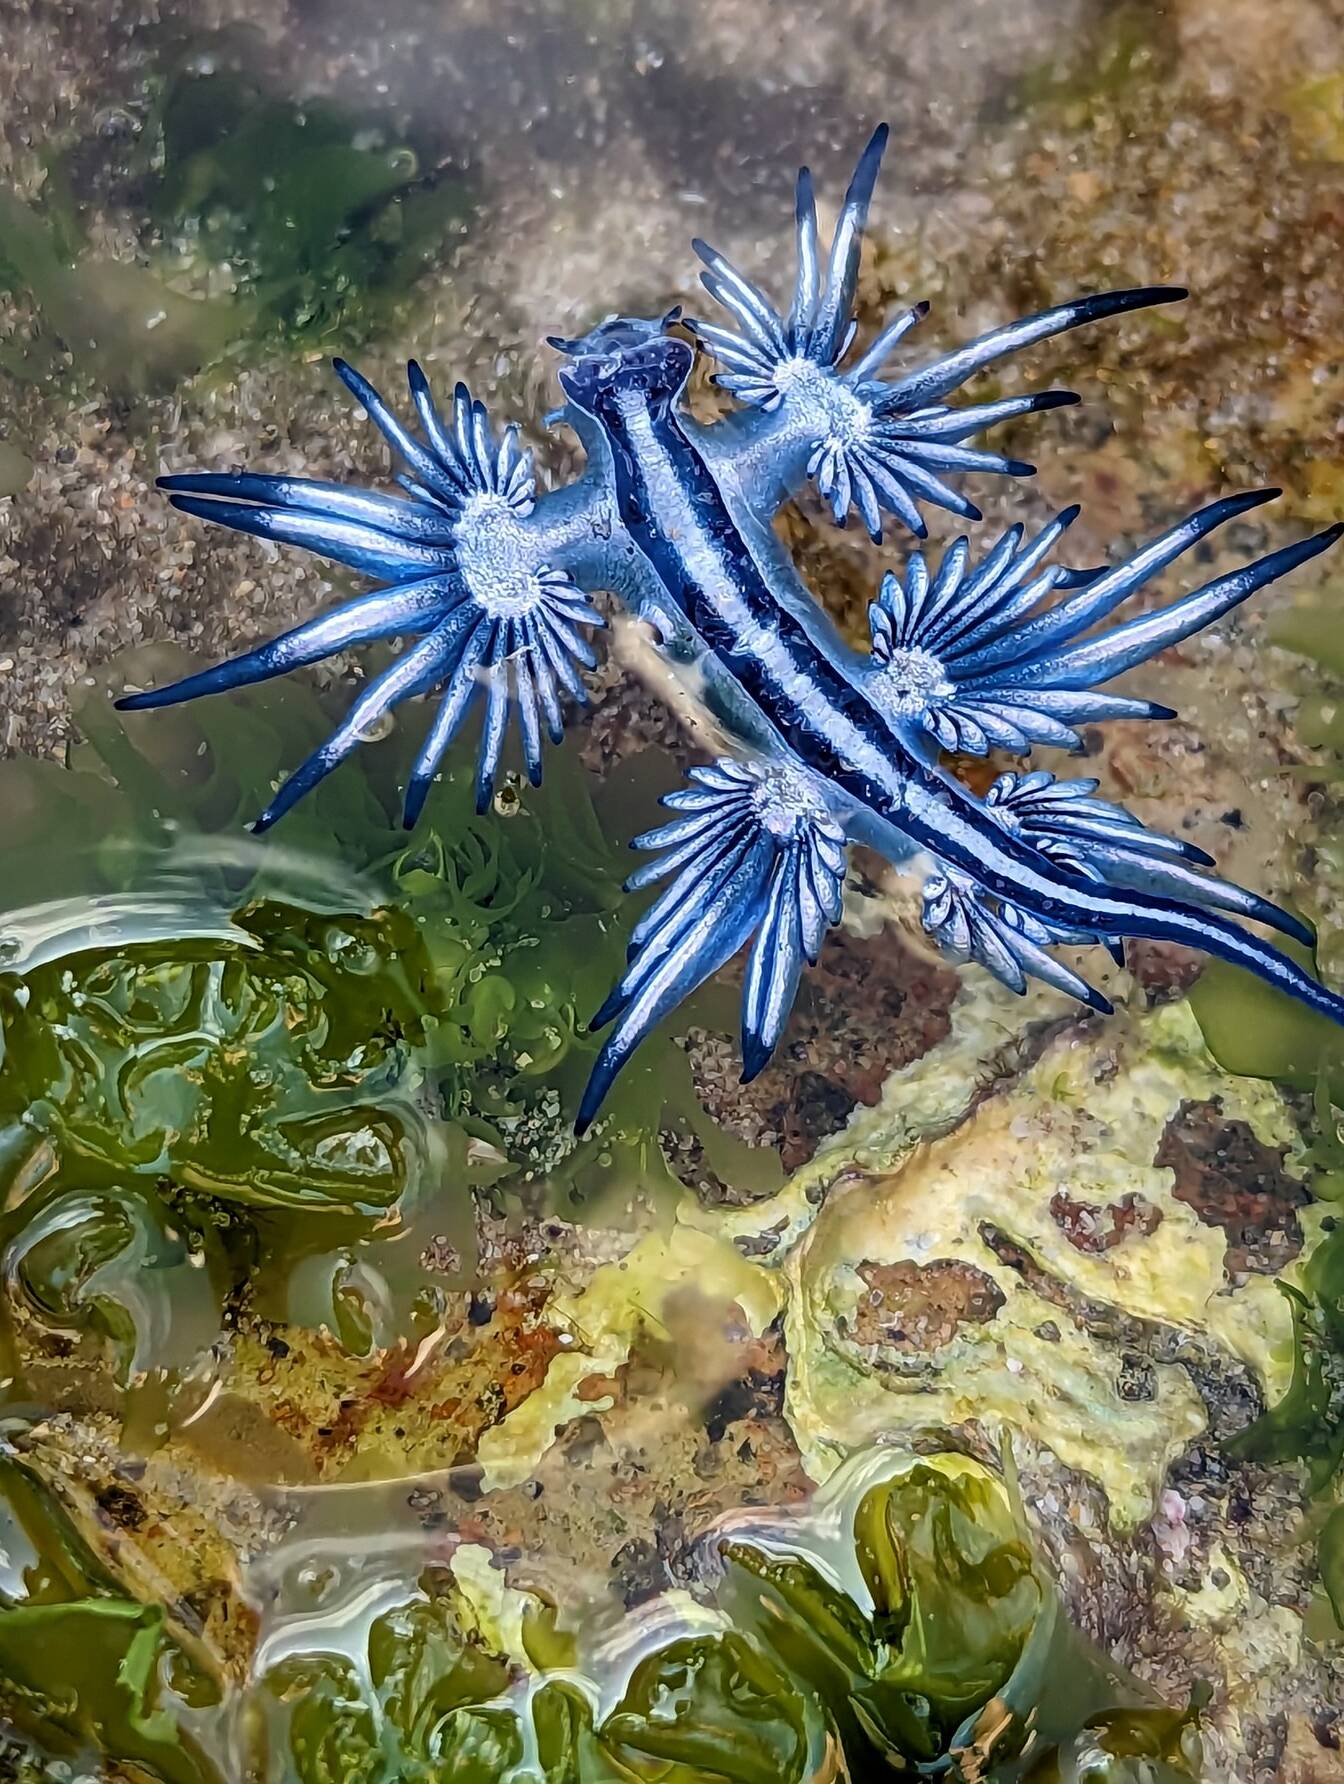 the blue dragon mollusk